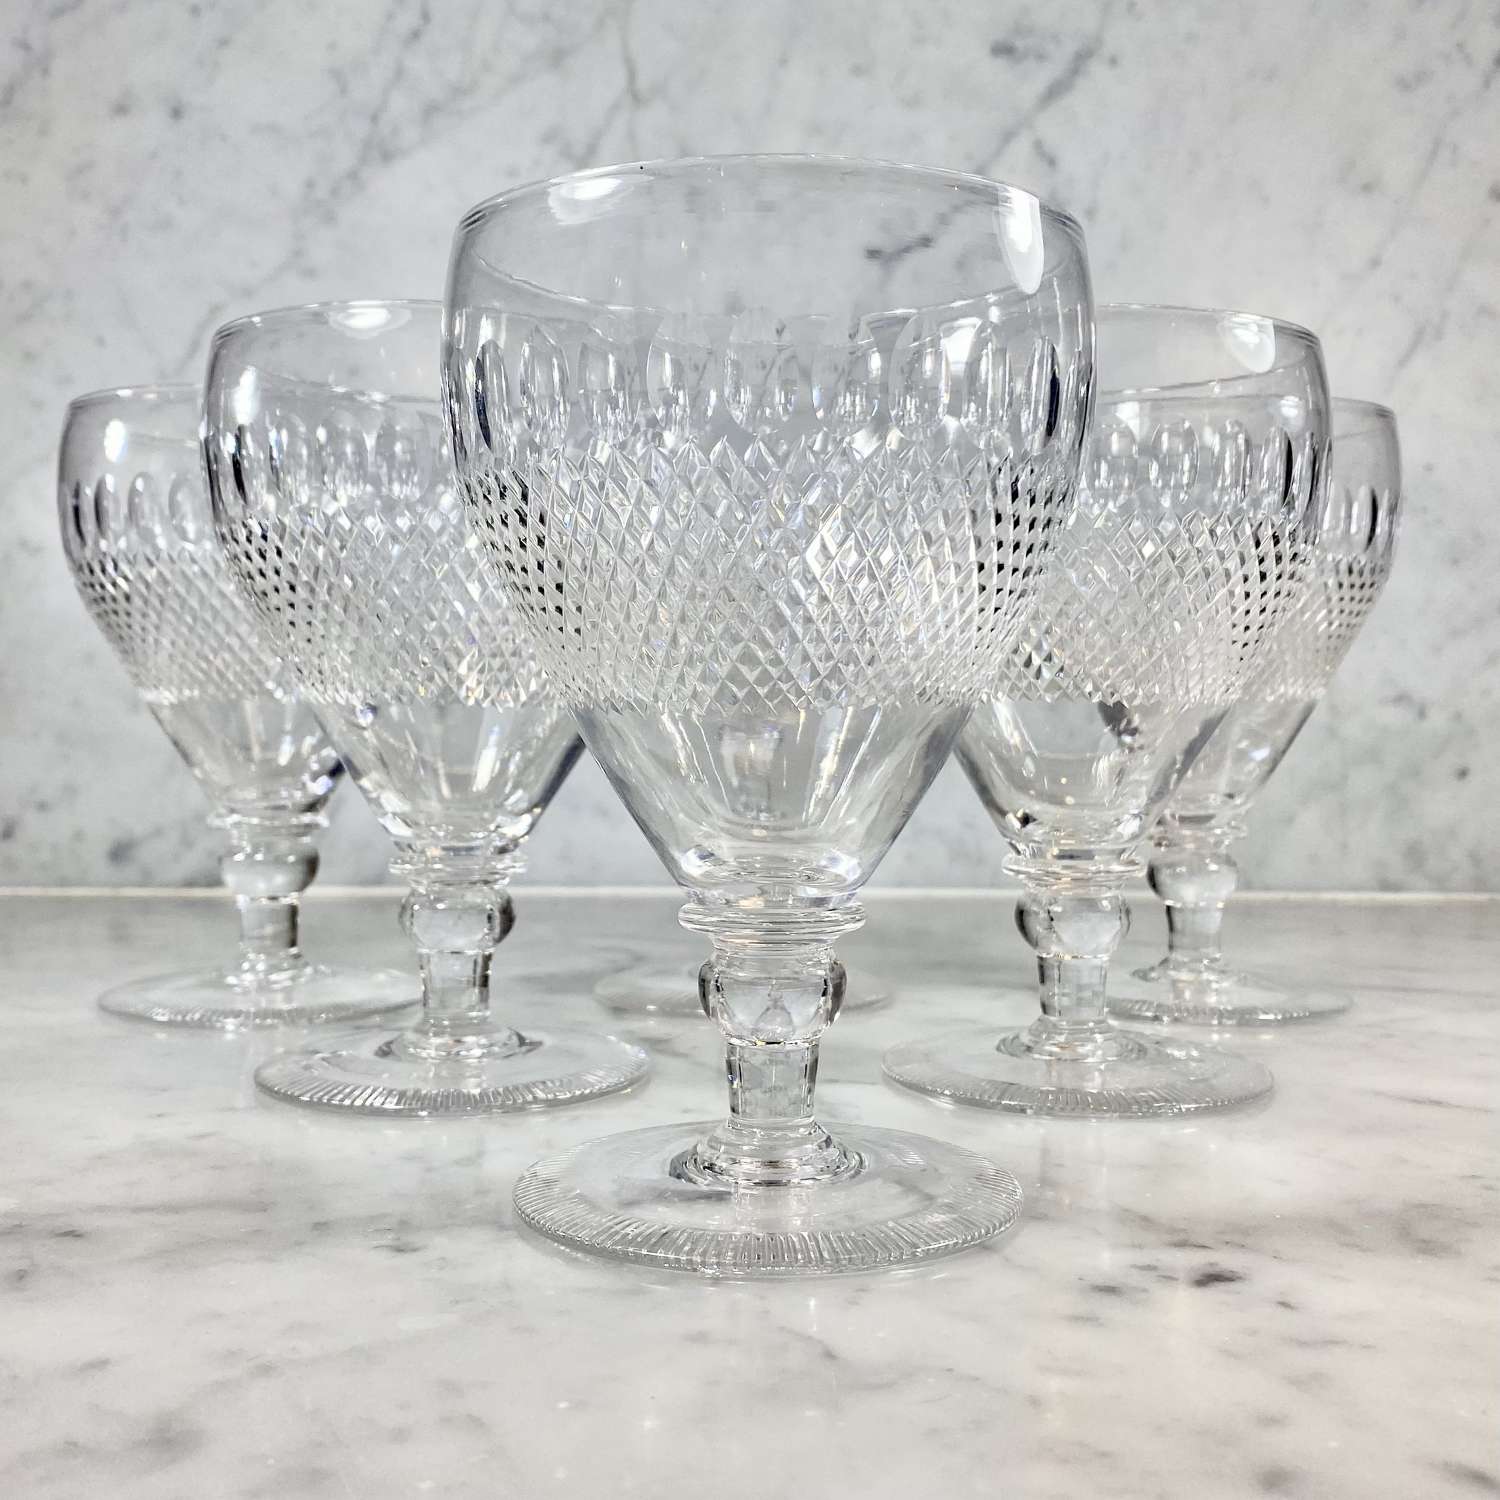 Six fabulous large cut crystal Rummer goblets